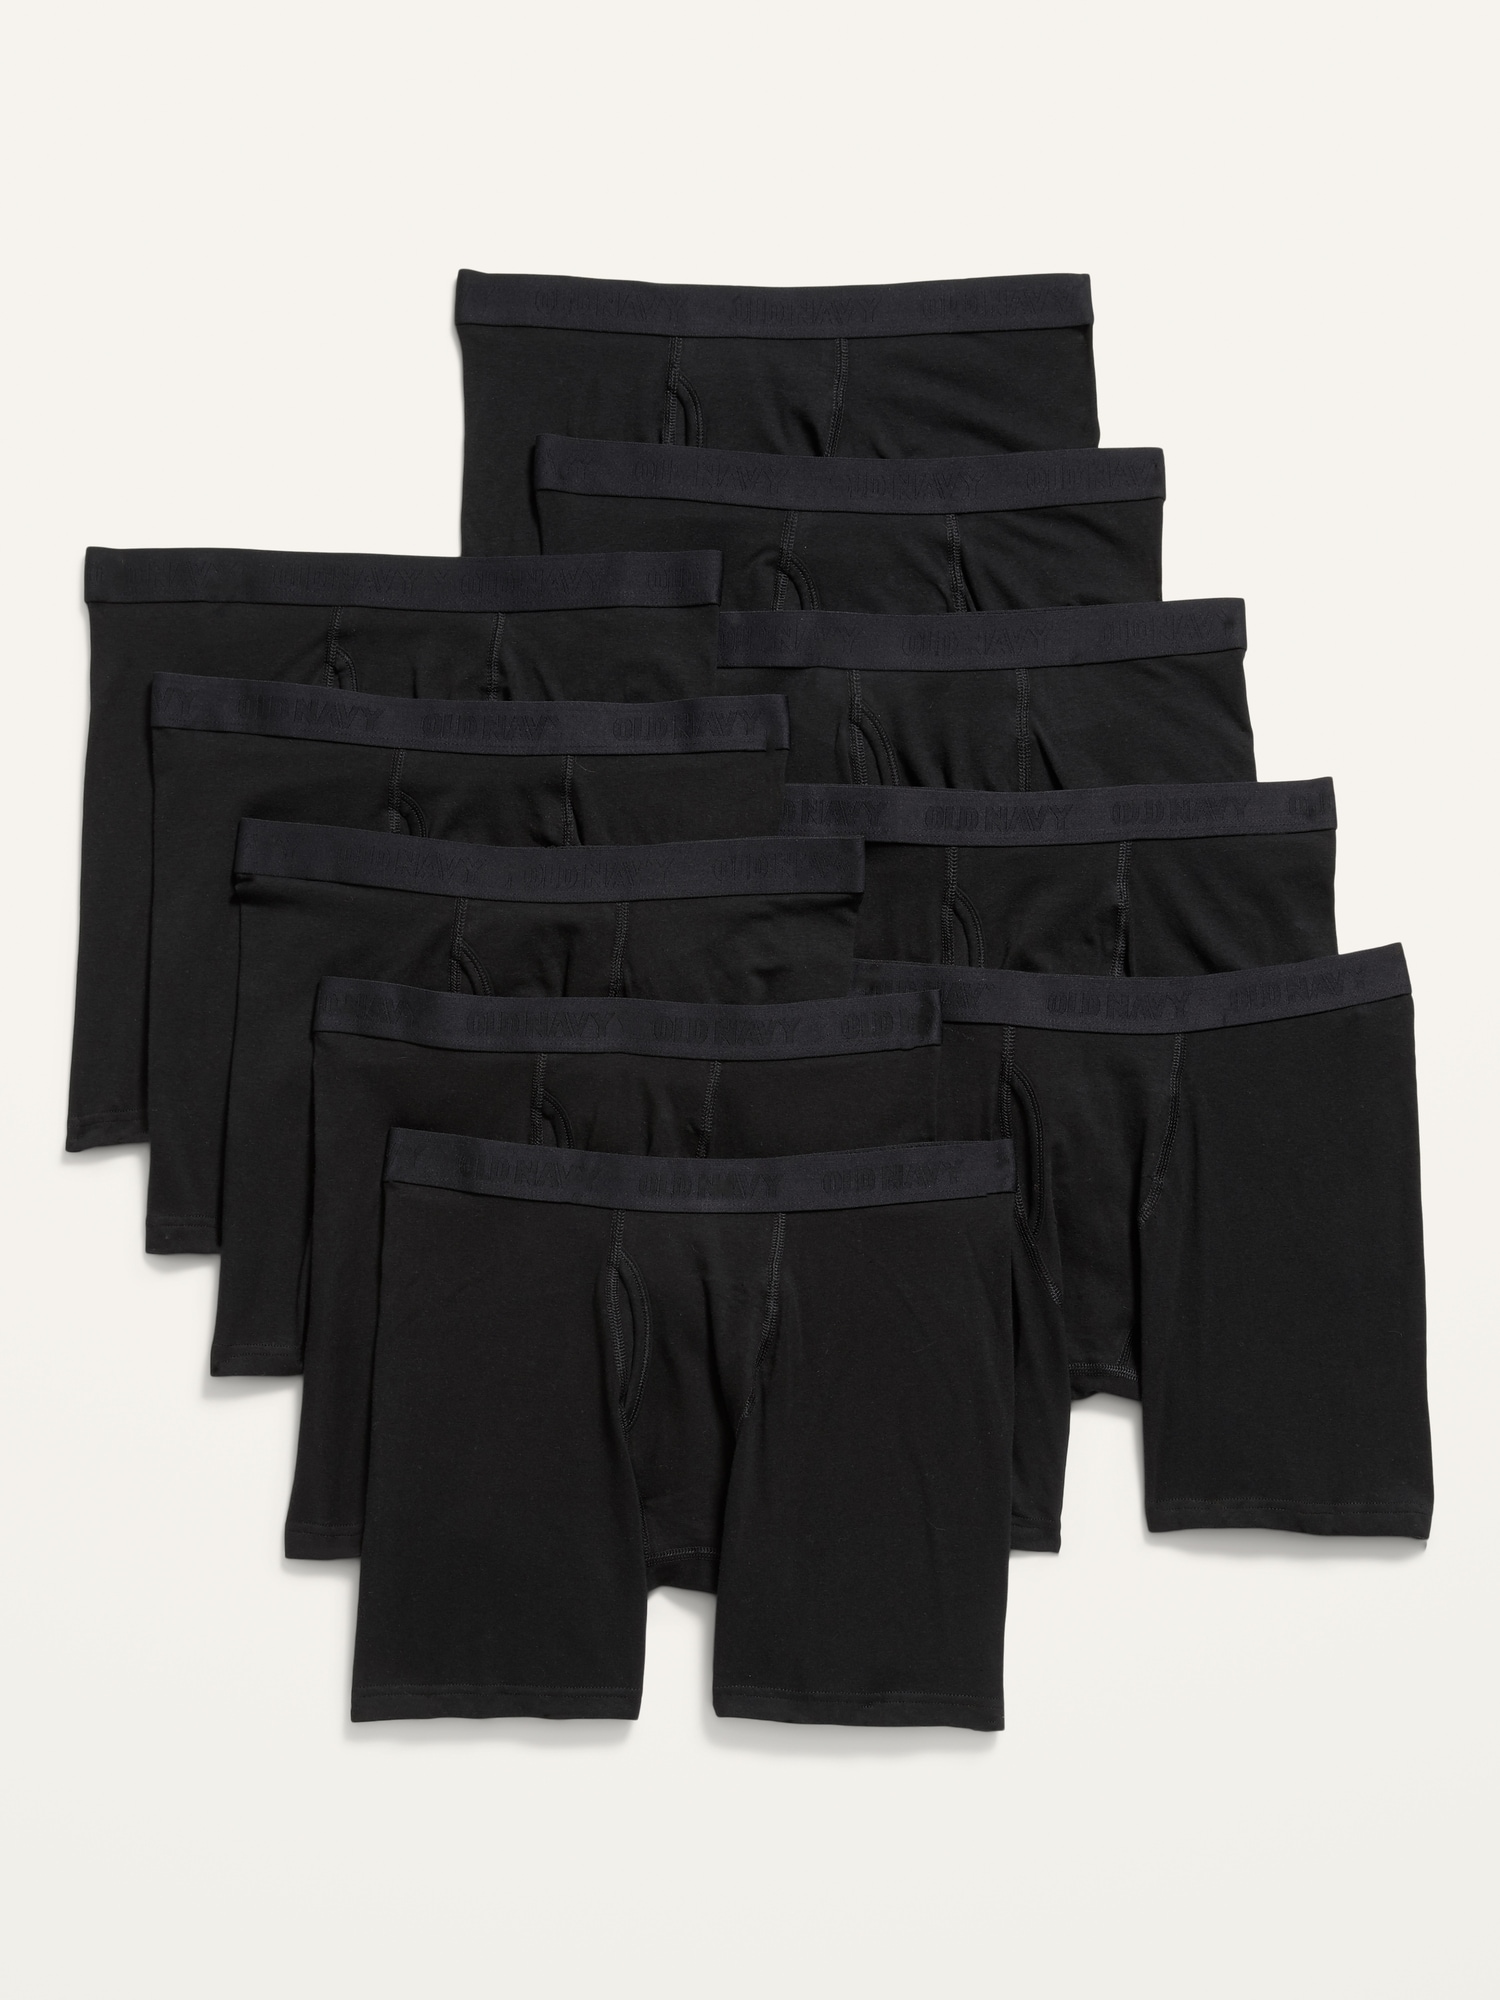 Womens Boxer Briefs, Tuxedo Underwear by FOXERS, Black and White